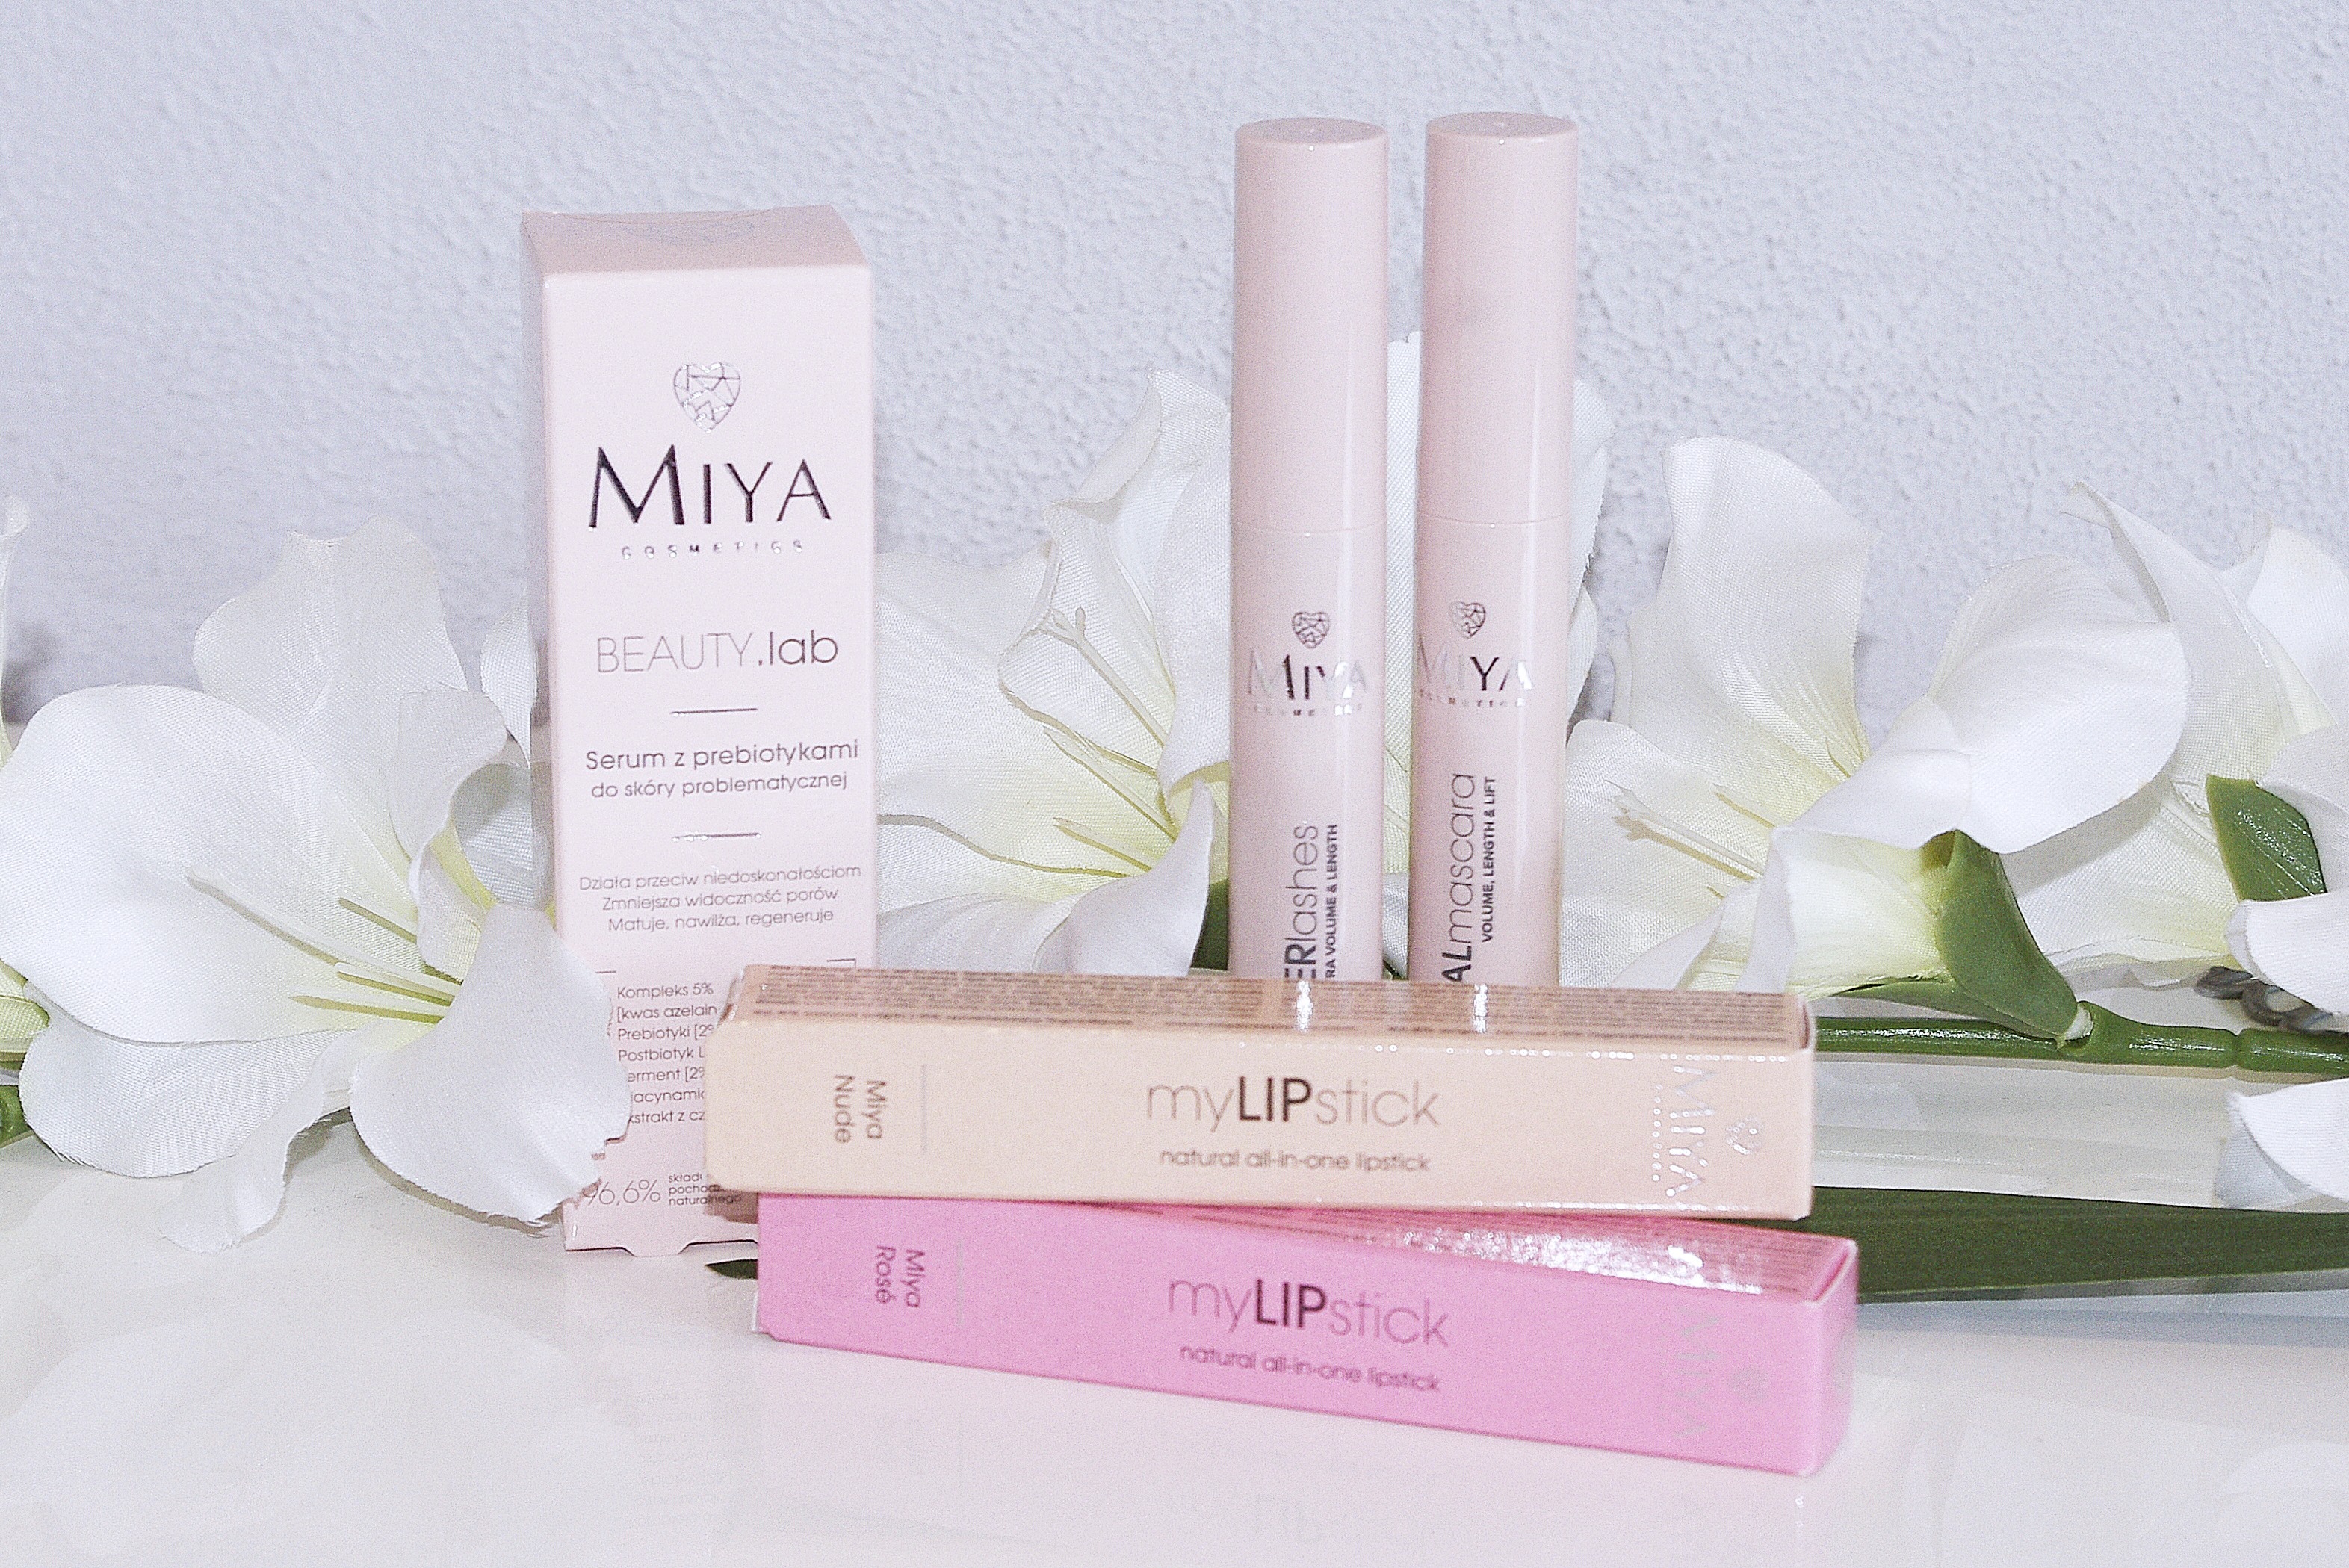 Miya cosmetics